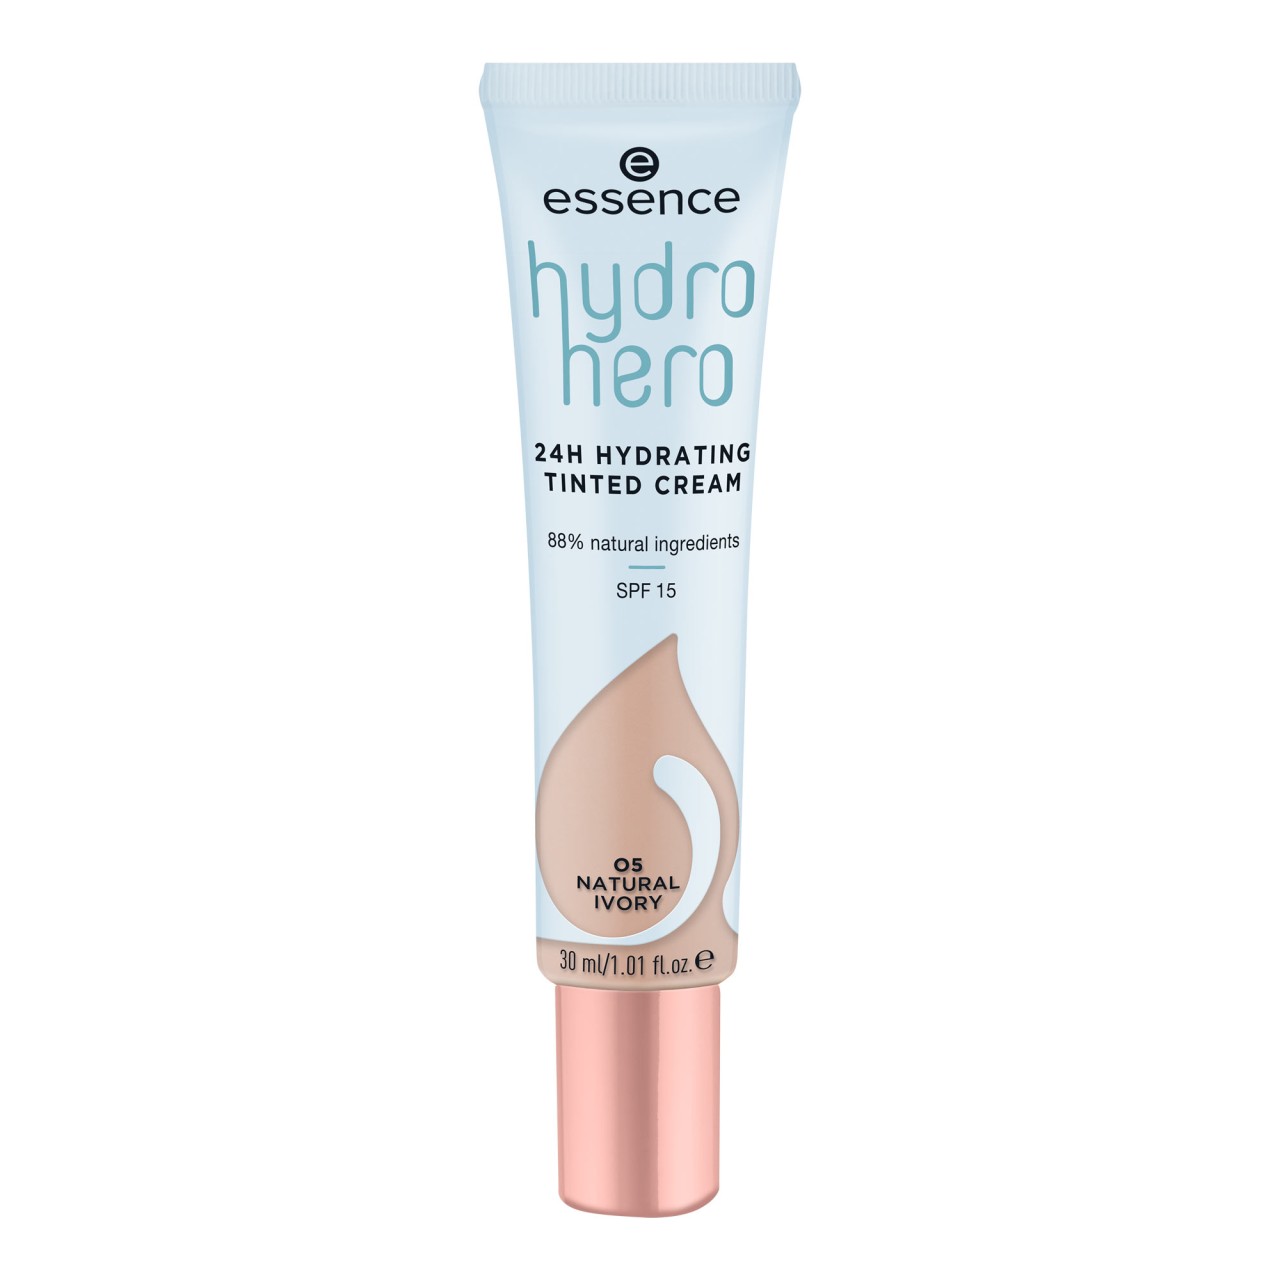 ESSENCE - Hydro Hero 24H Tinted Cream -  Natural Ivory